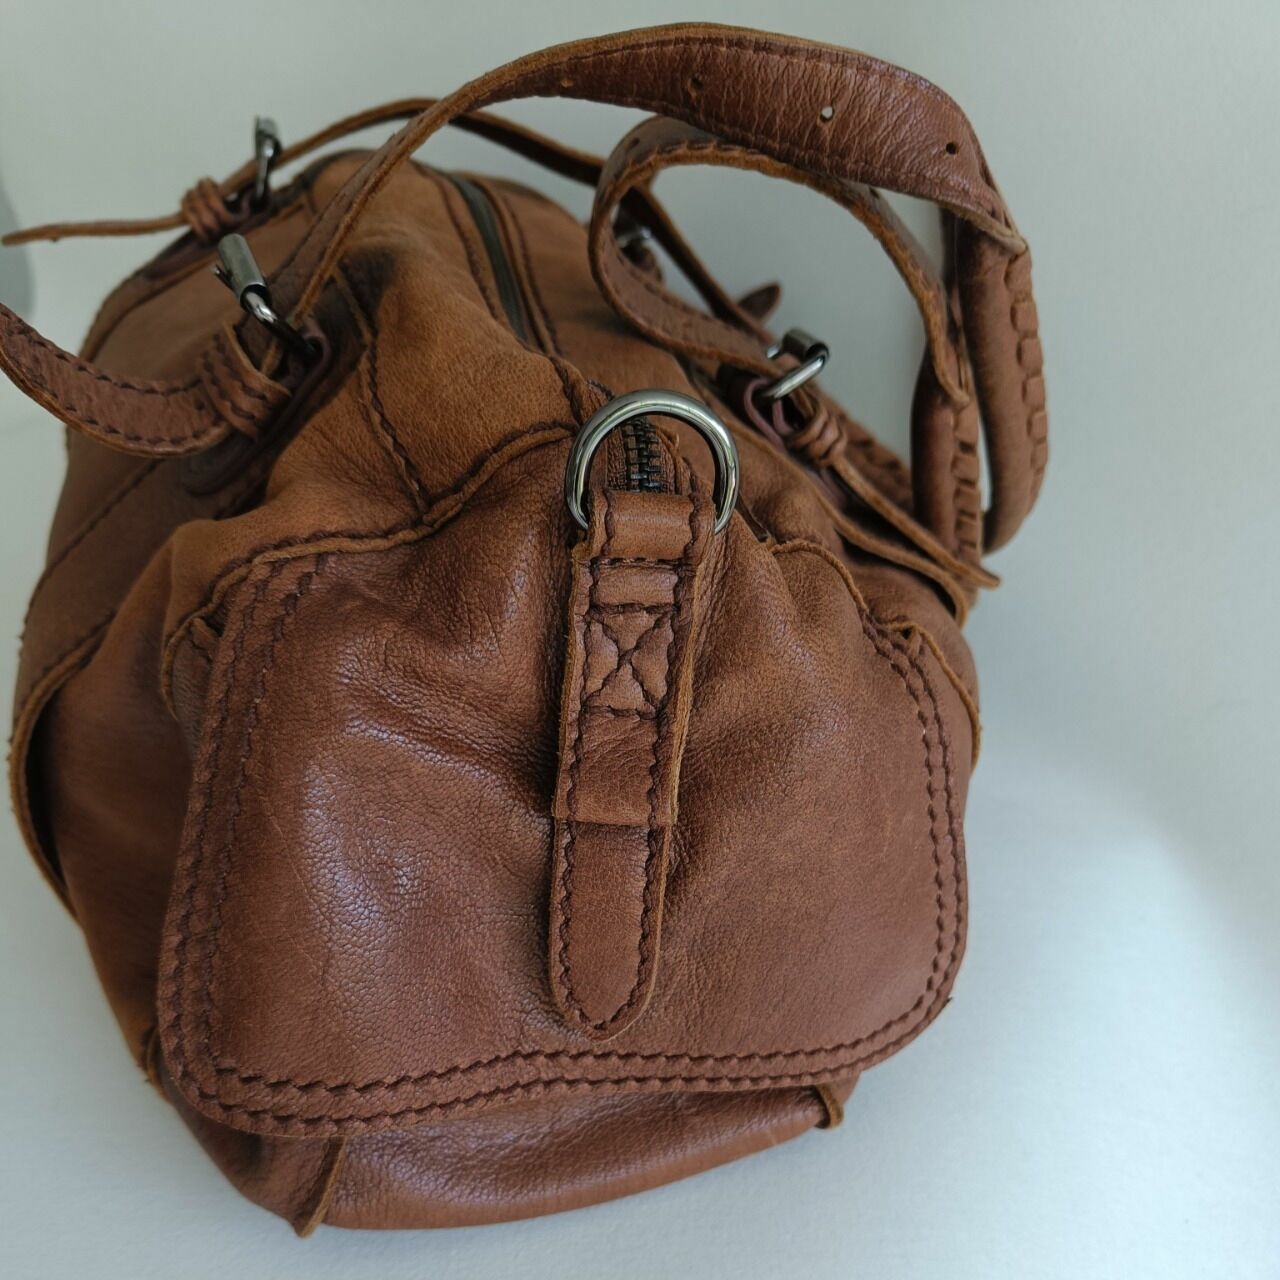 Isabella Fiore Brown Shoulder Bag